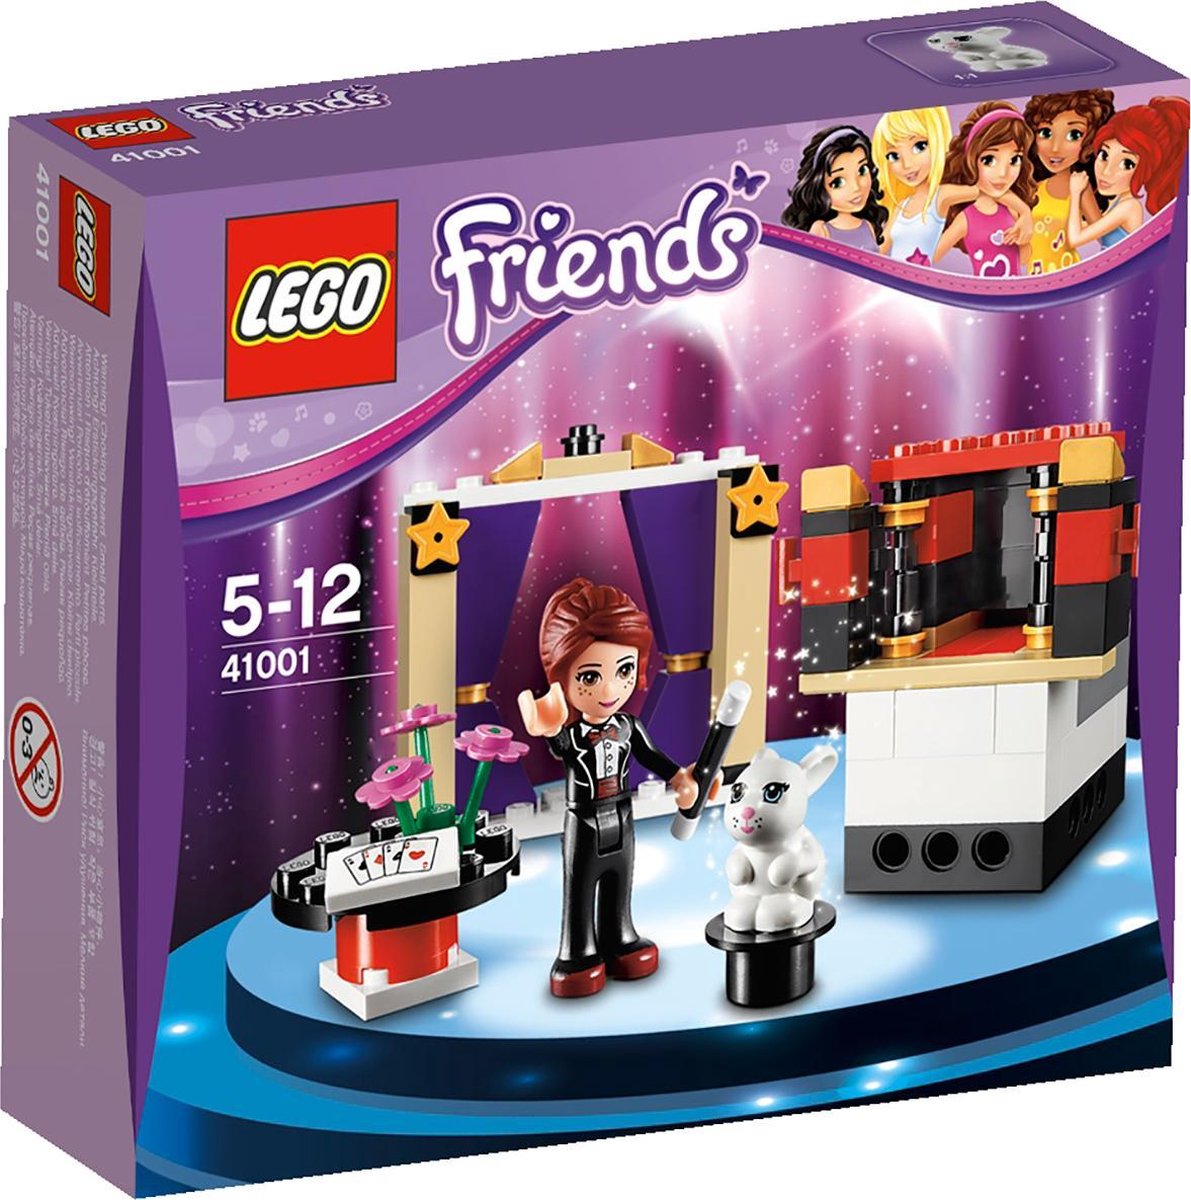 vitalitet Opmuntring klamre sig LEGO Friends Mia's Toverkunsten - 41001 | bol.com